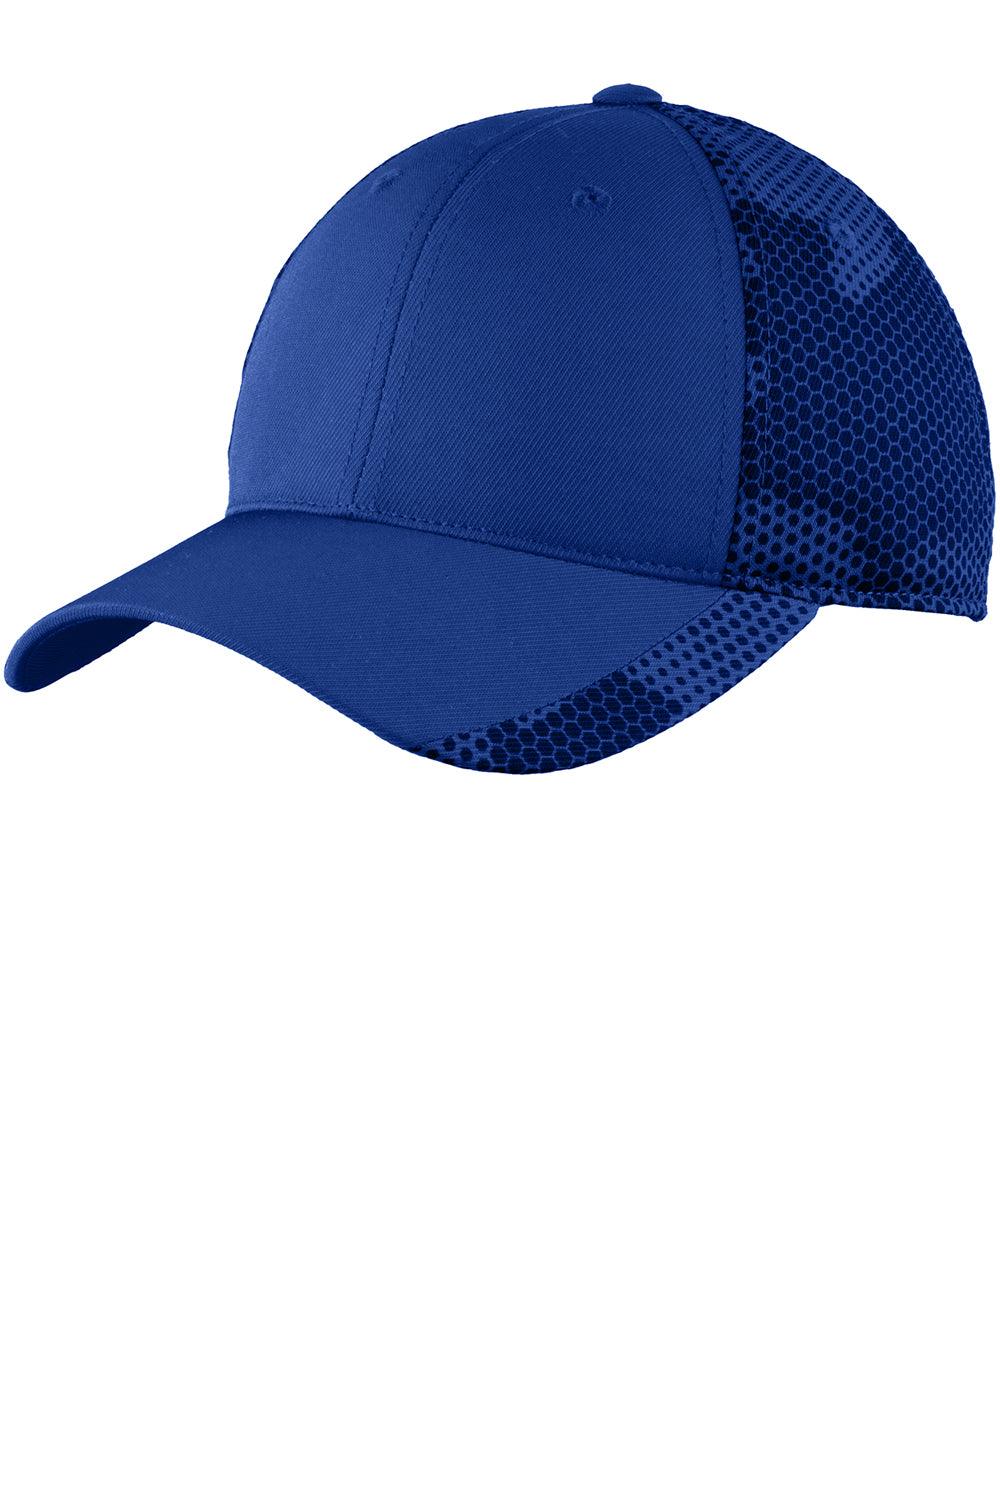 Sport-Tek STC23 Mens CamoHex Moisture Wicking Adjustable Hat Royal Blue Front